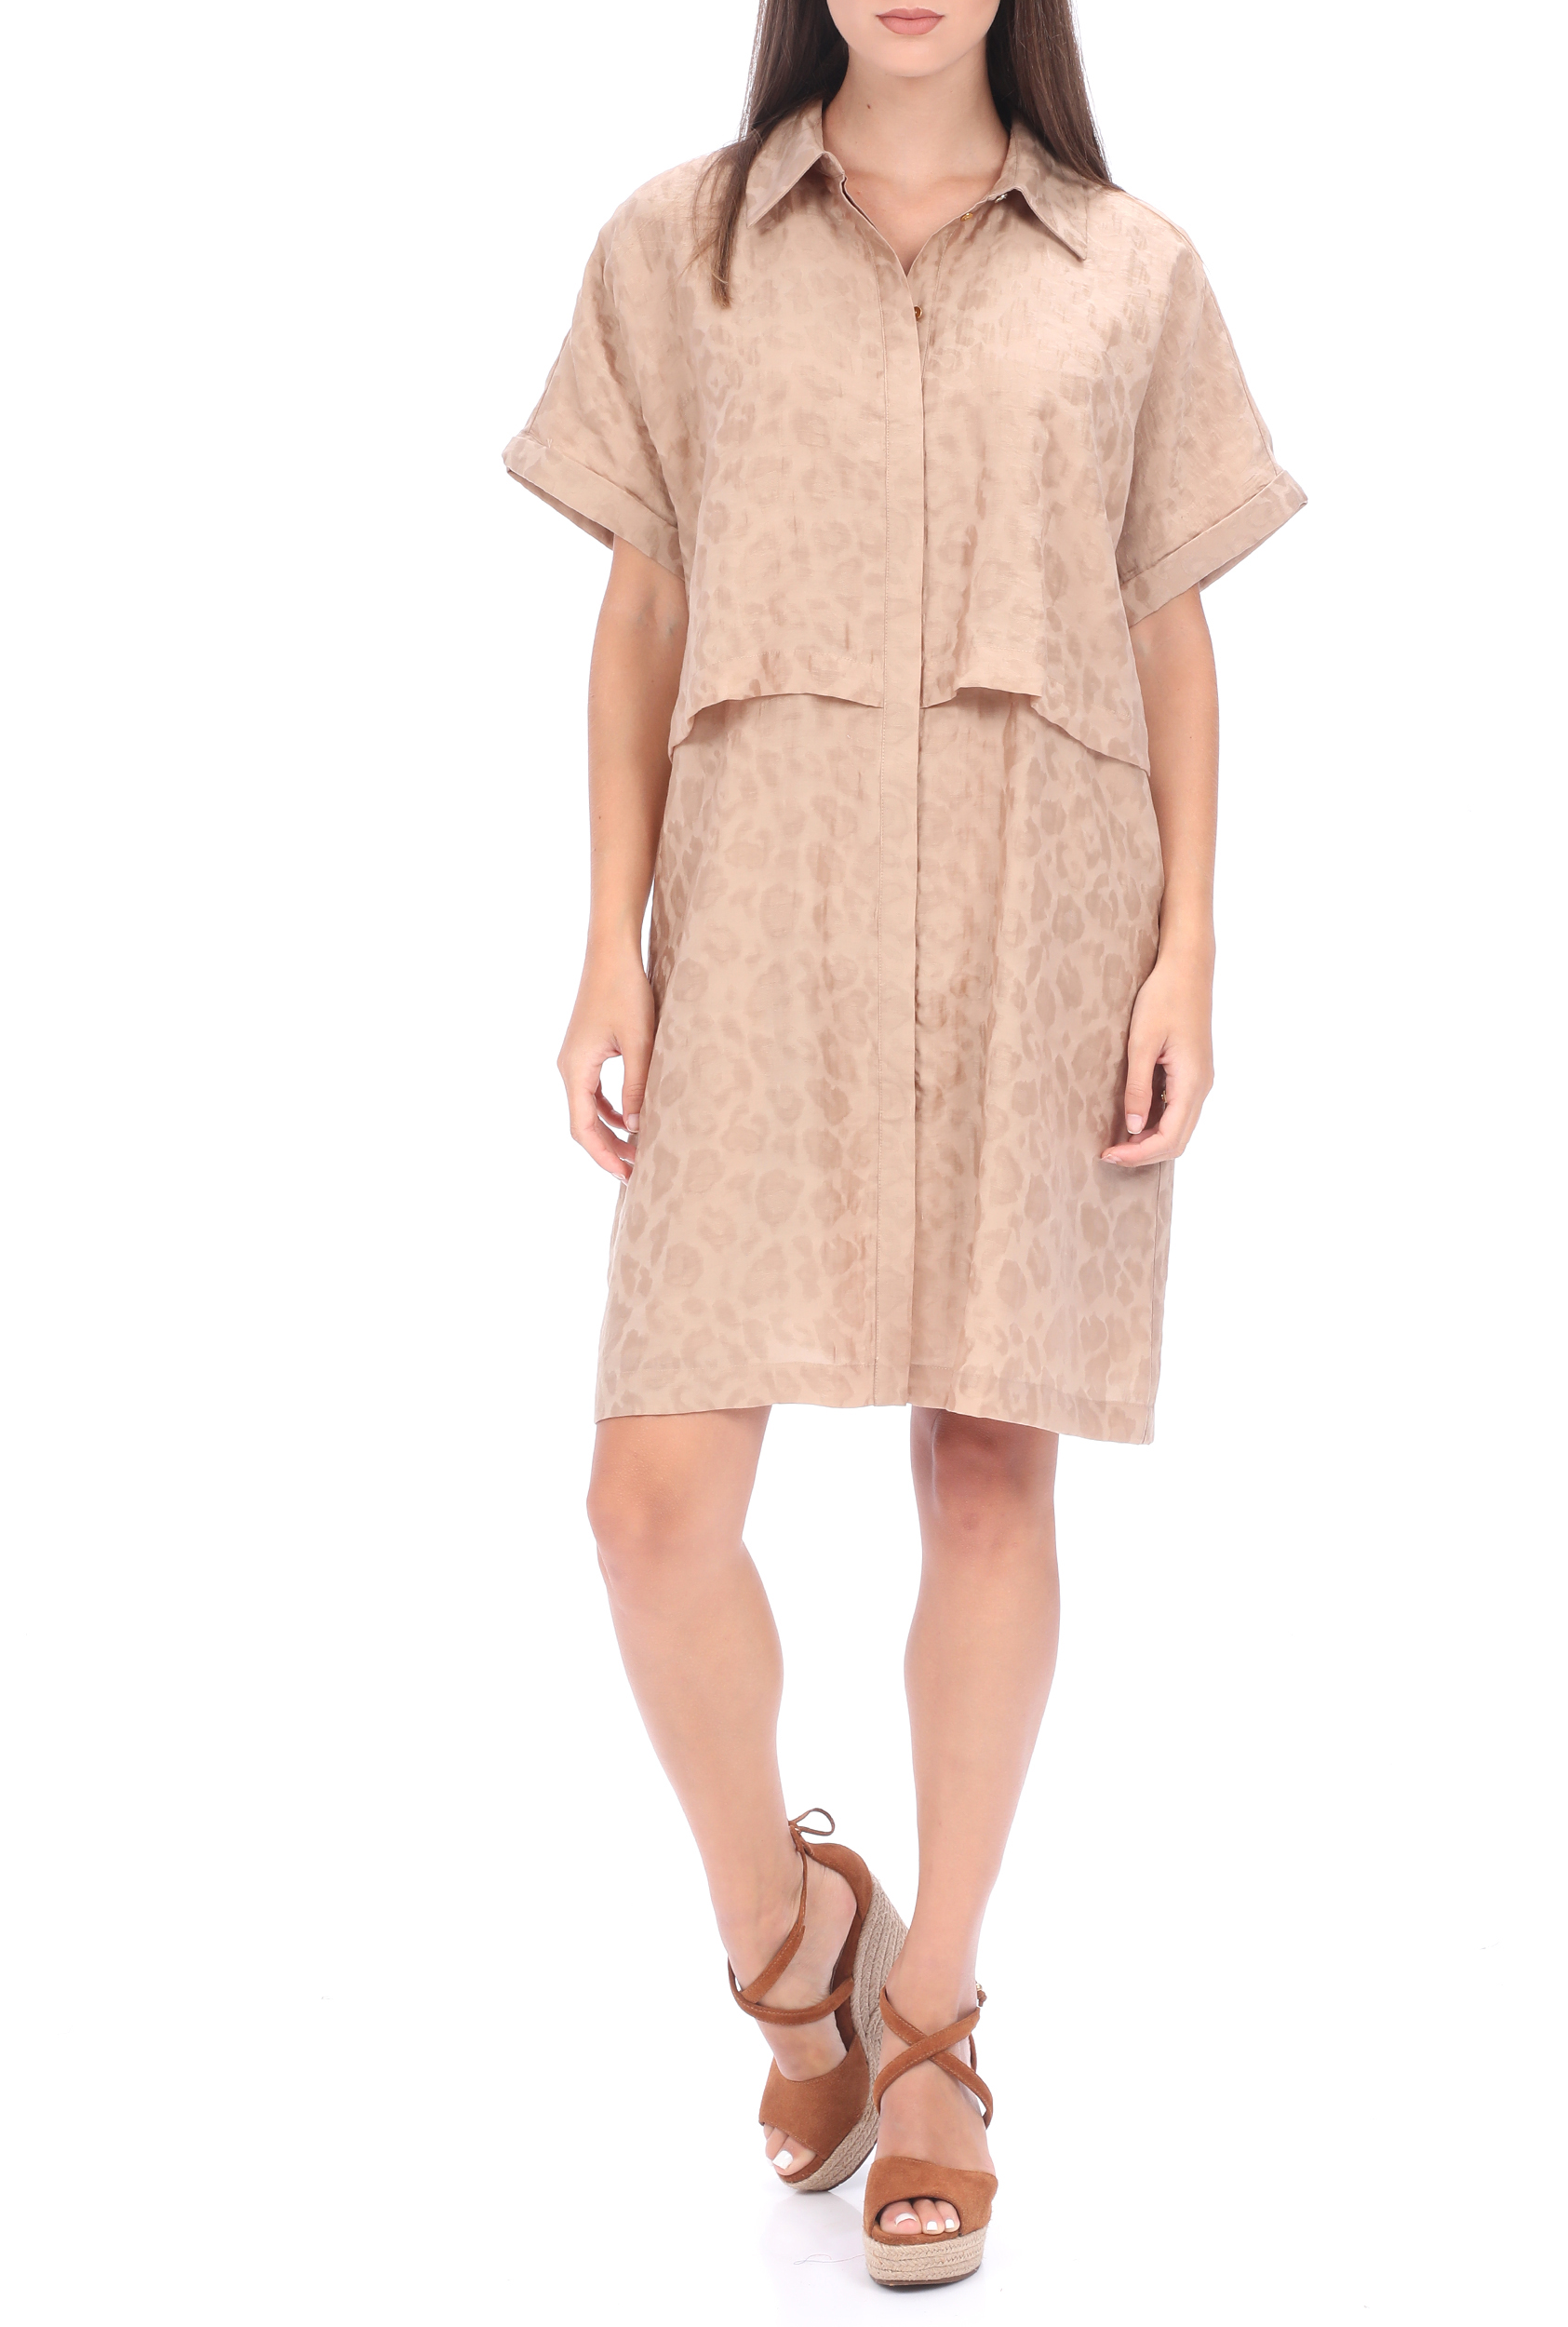 SCOTCH & SODA – Γυναικείο mini φόρεμα SCOTCH & SODA shirt dress μπεζ 1809212.0-00M4